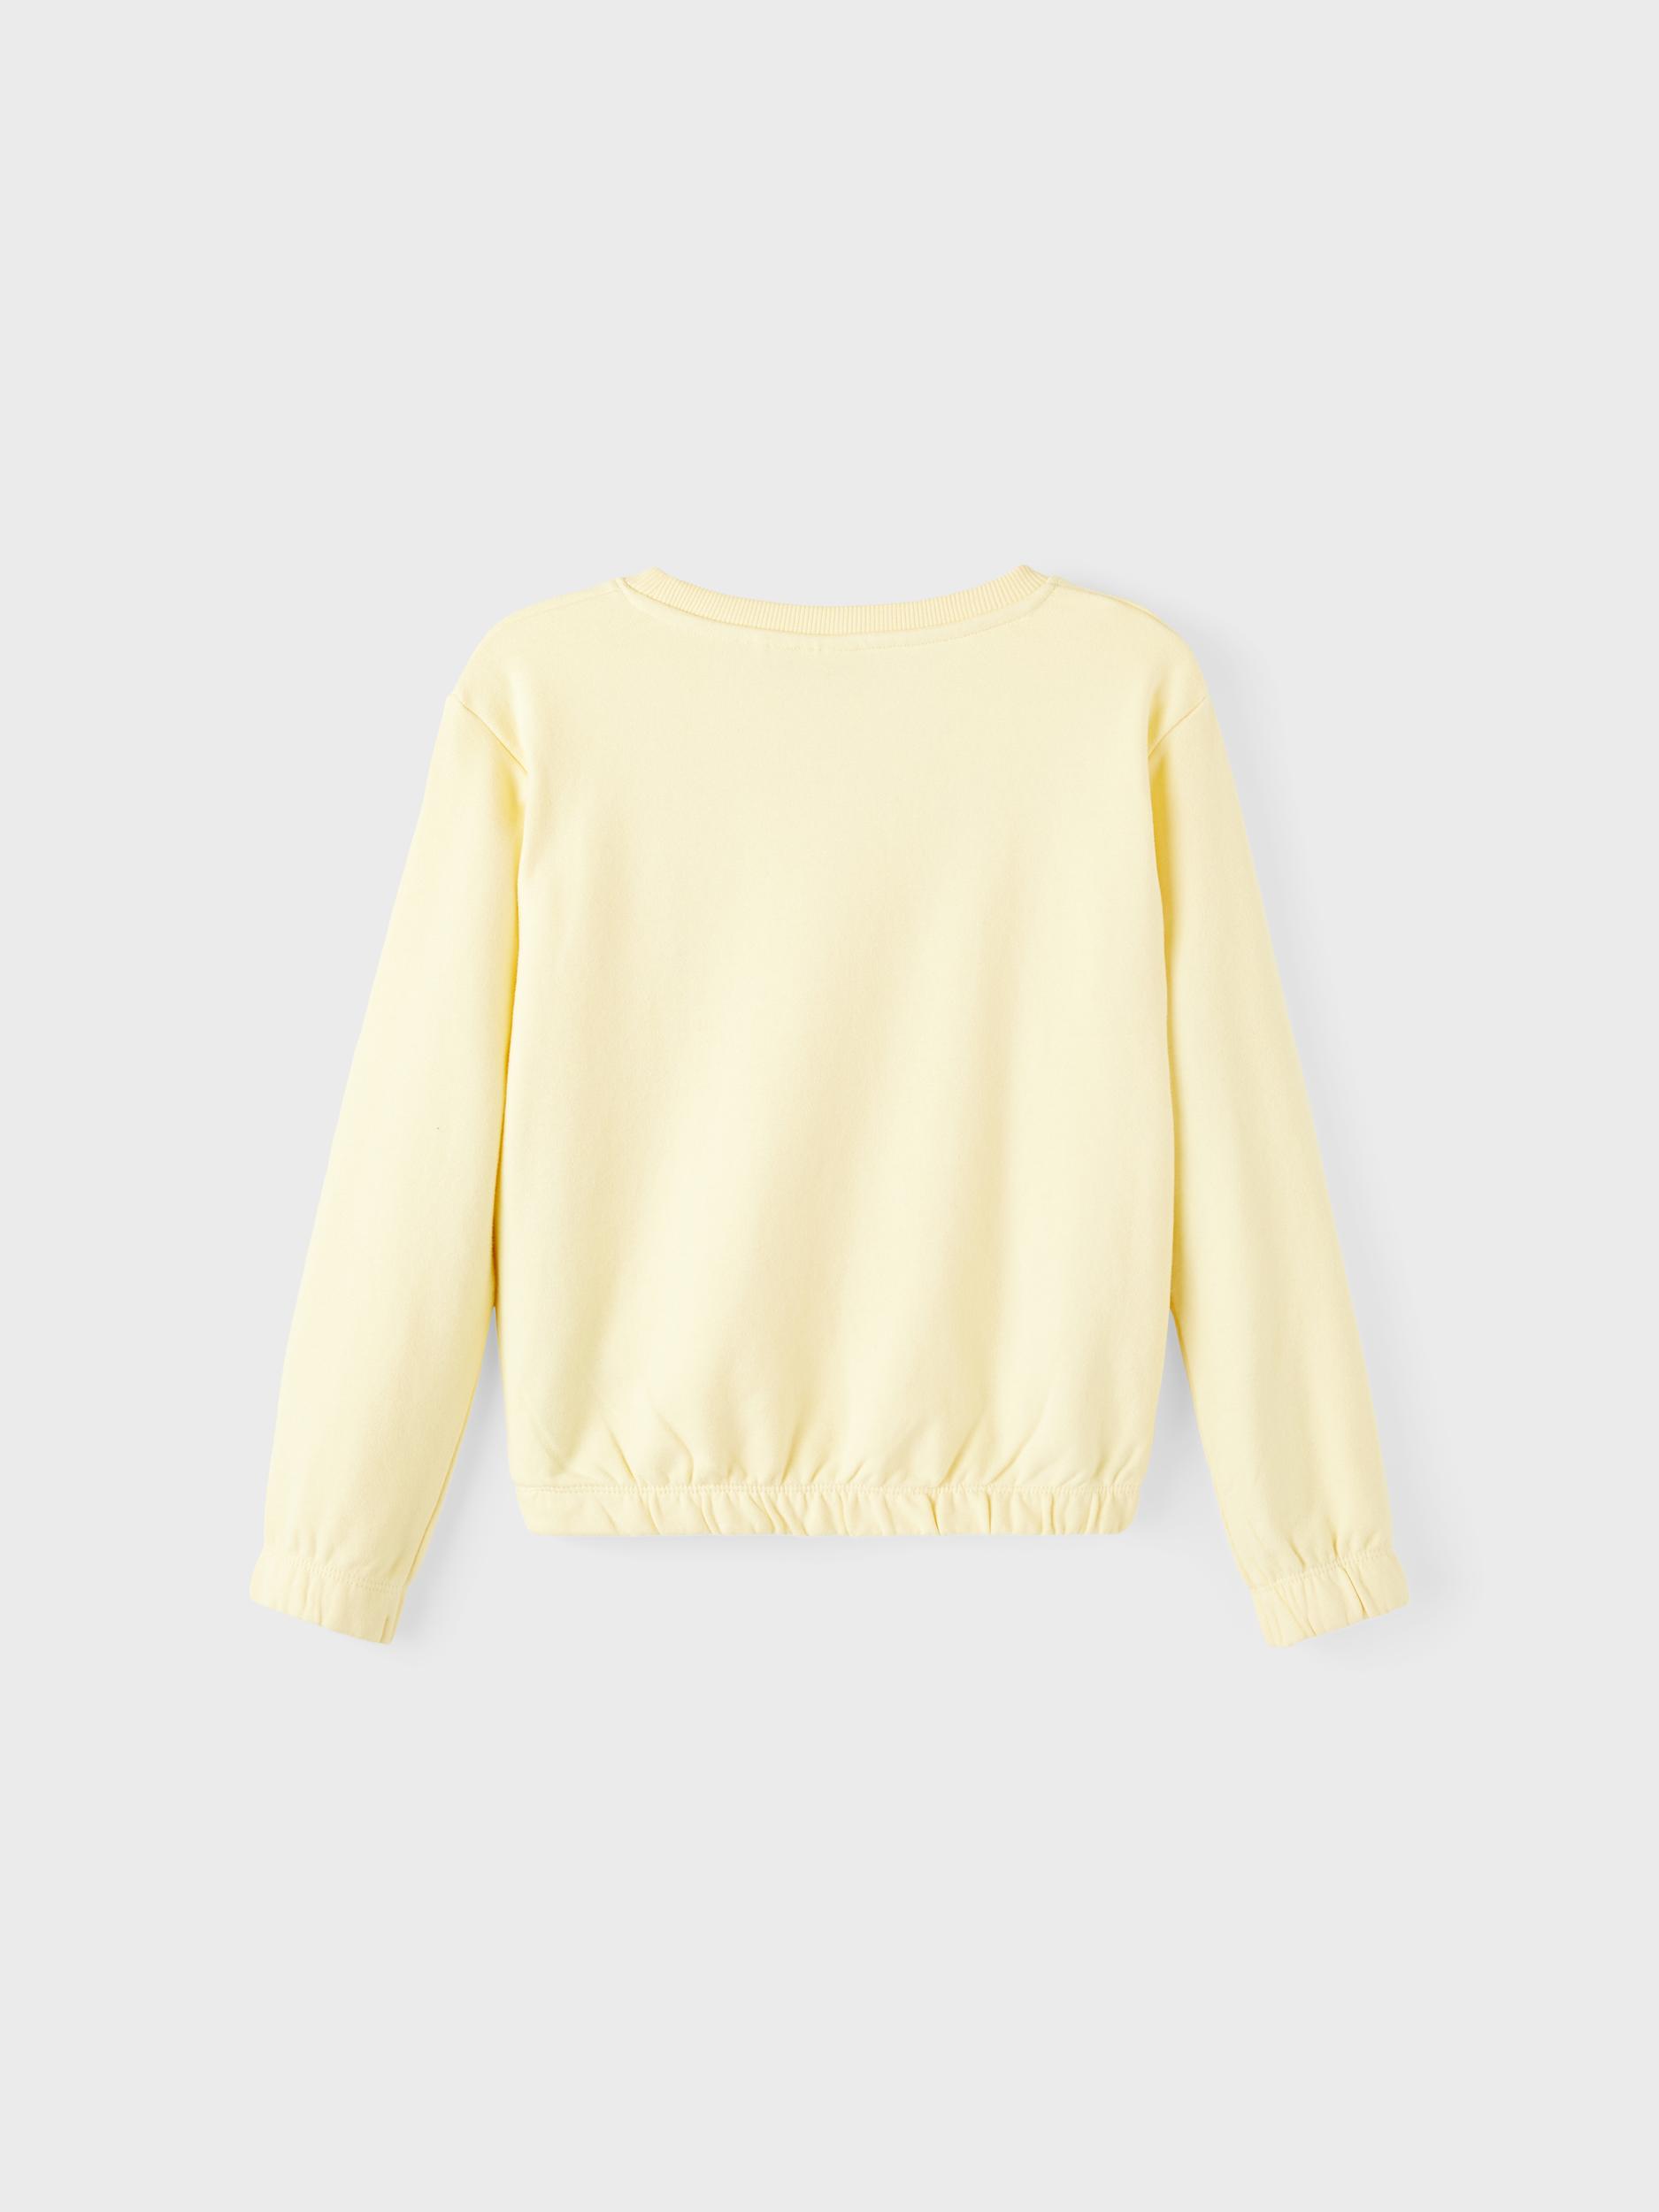 Sweatshirt, Double Cream, 122-128 cm